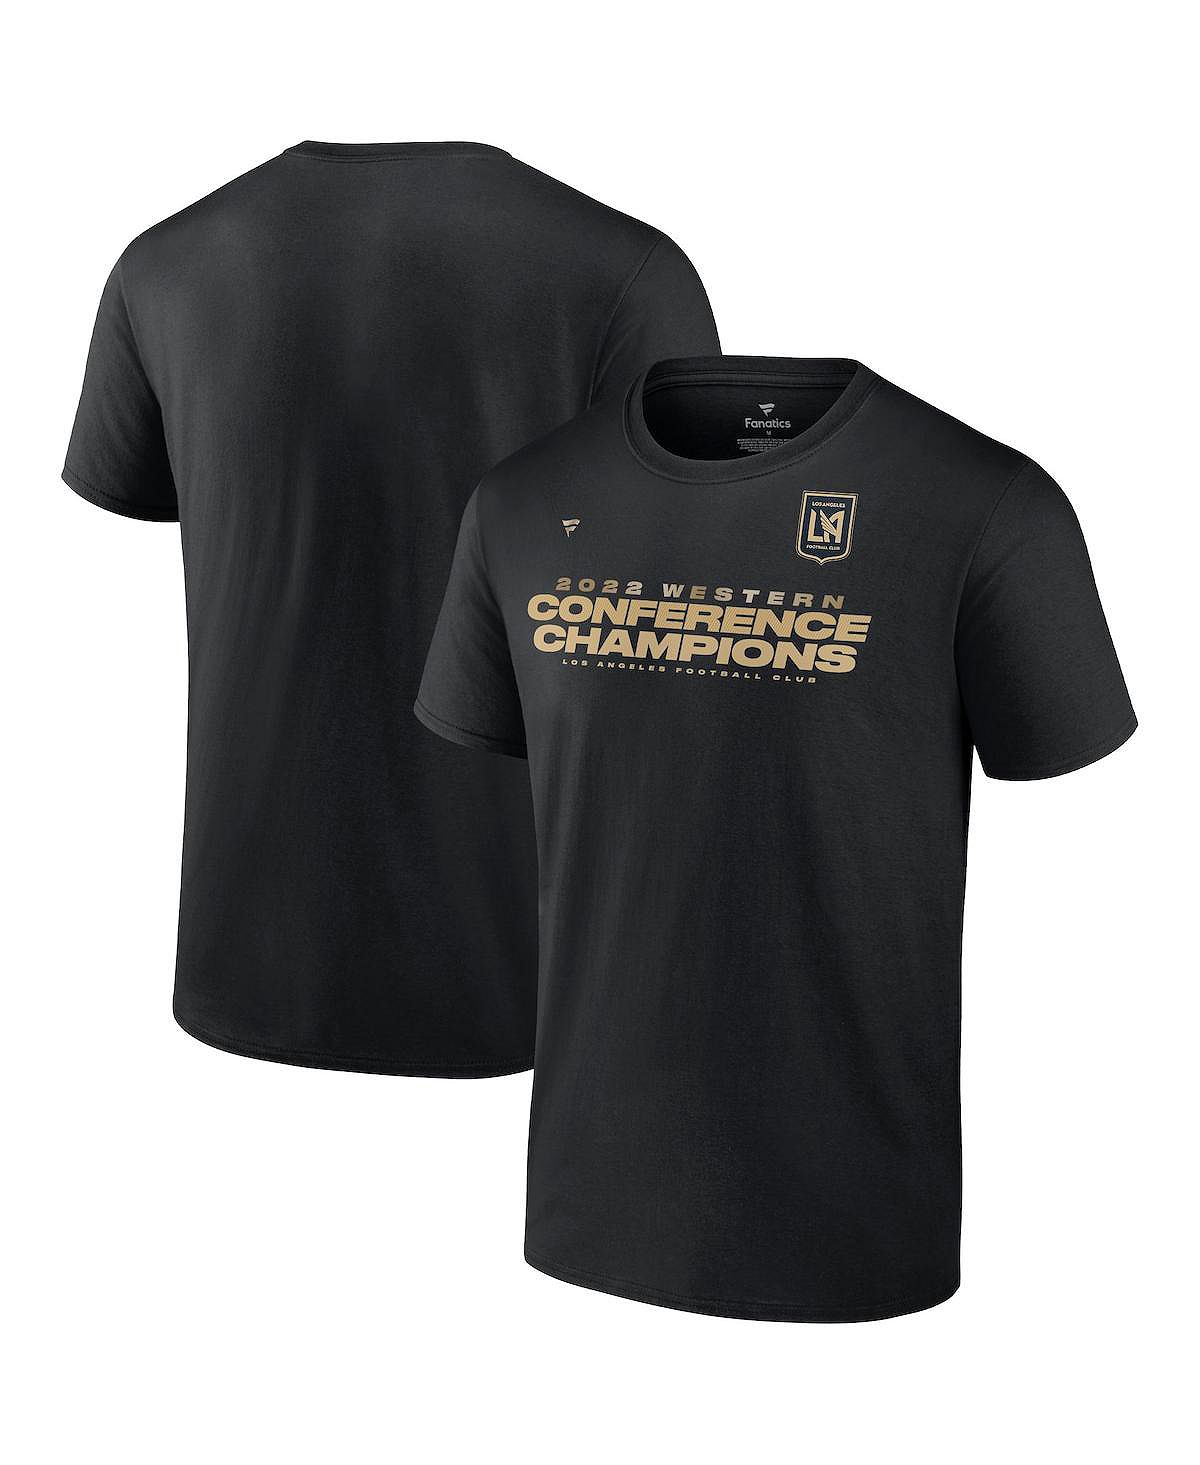 Мужская черная футболка с логотипом lafc 2022 mls western conference champions locker room Fanatics, черный